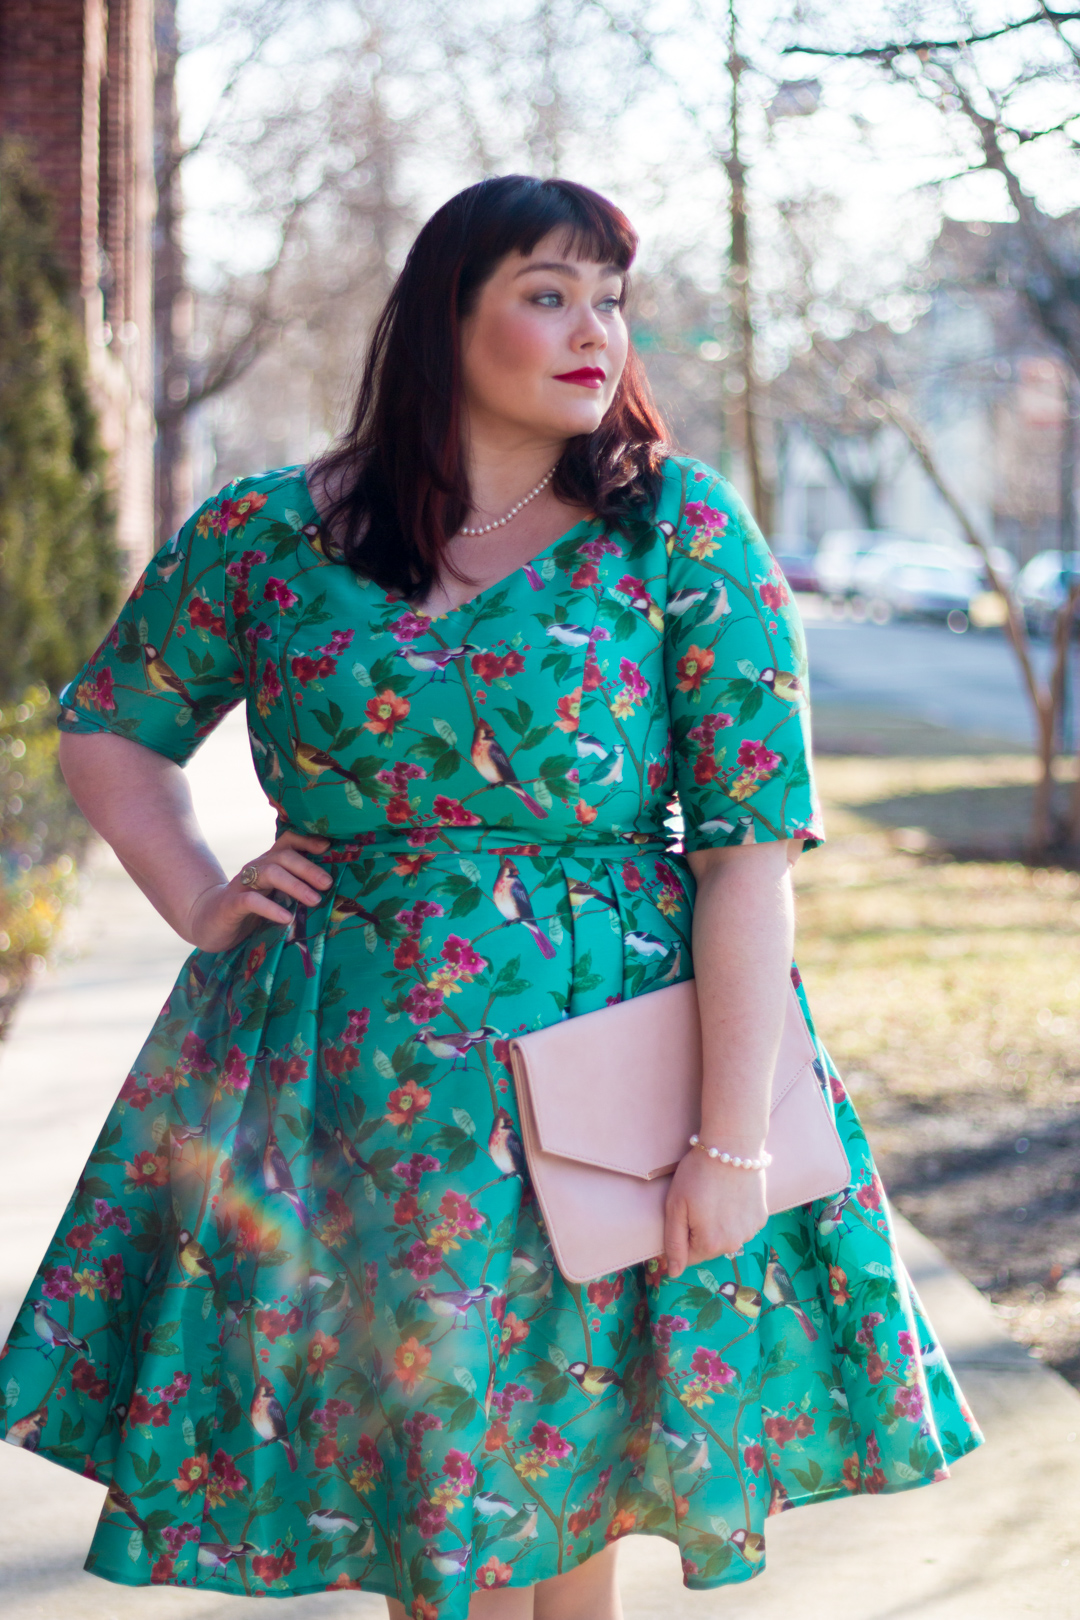 Plus Size Blogger Amber in eShakti green dupioni dress